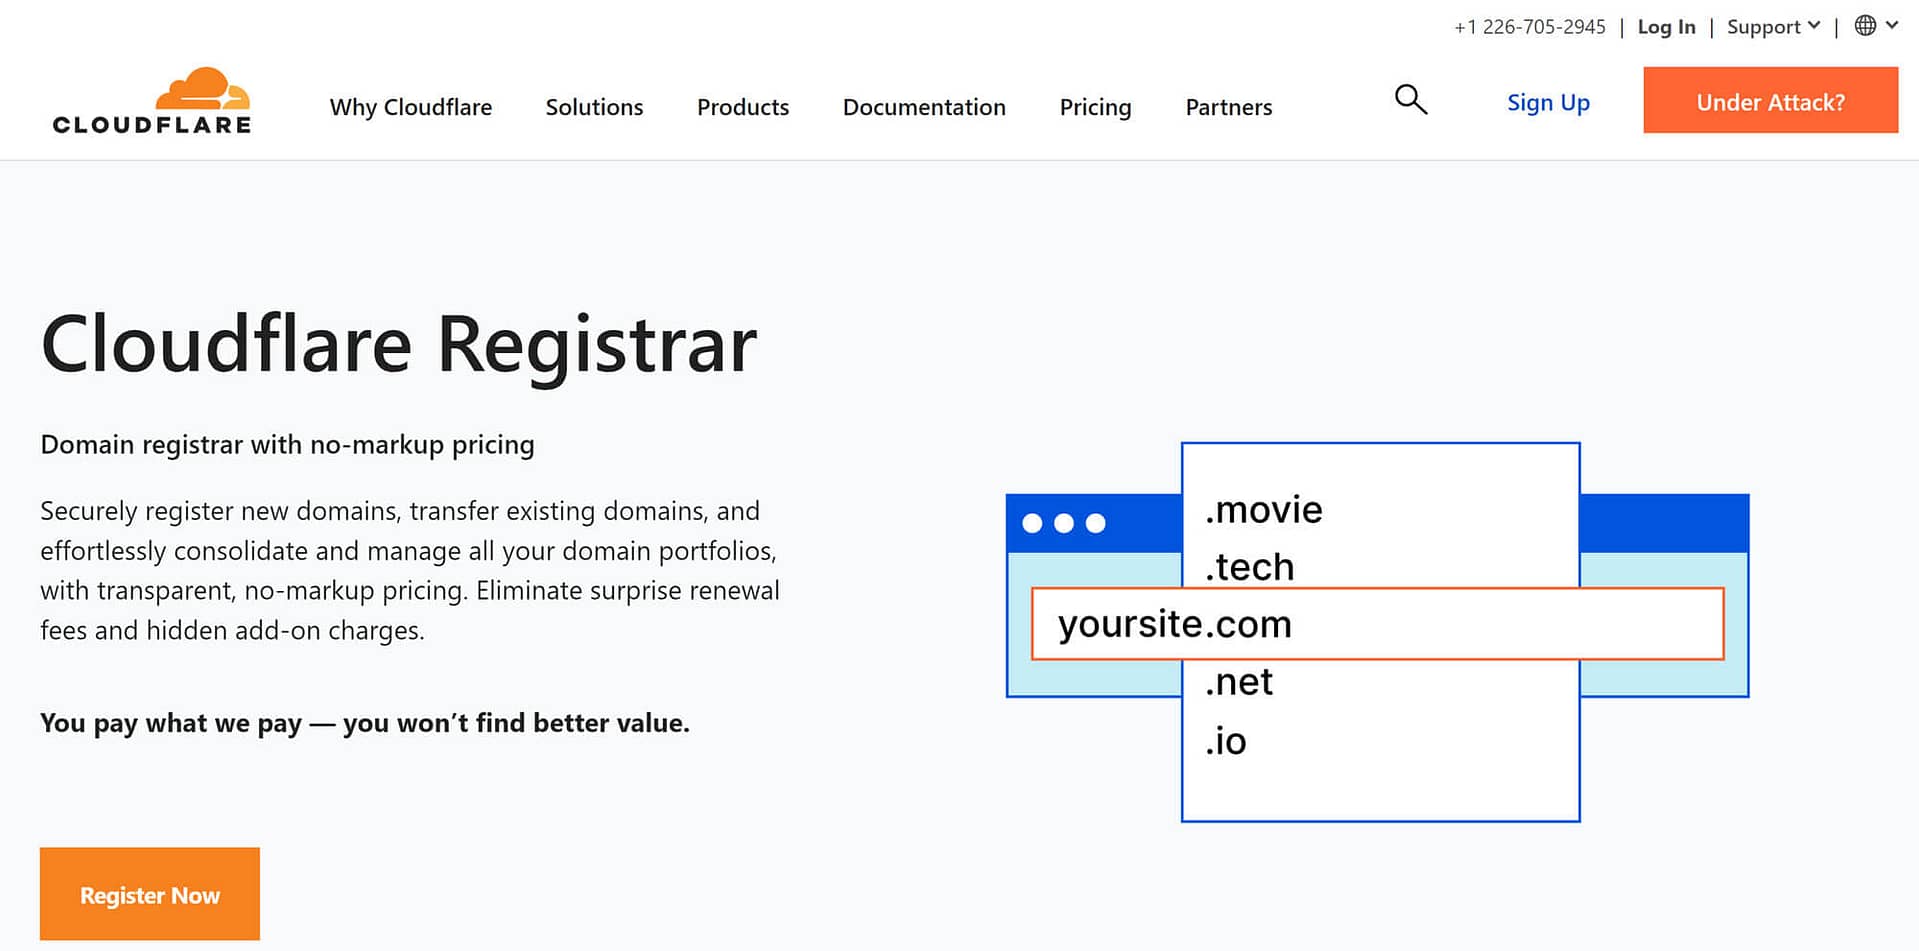 Cloudflare Registrar homepage